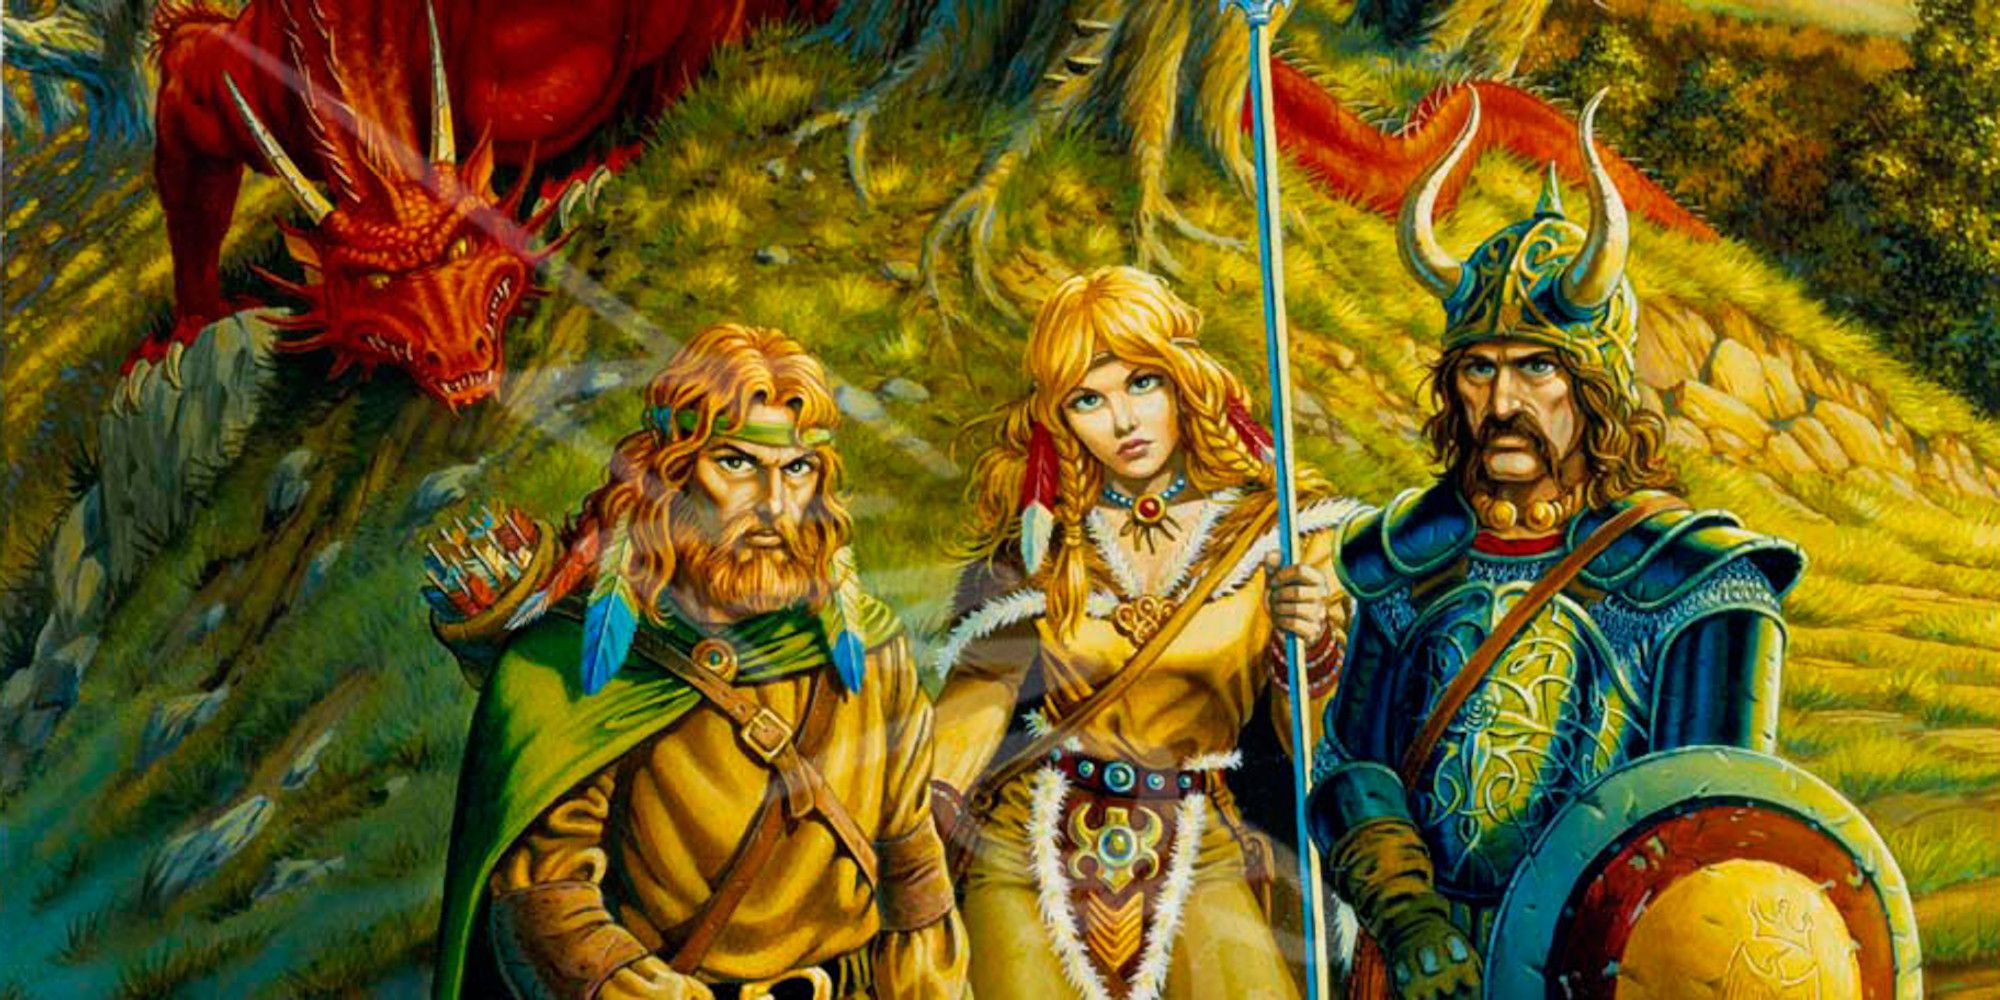 Caramon Majere, Tika Waylan and Sturm Brightblade pose before a dragon